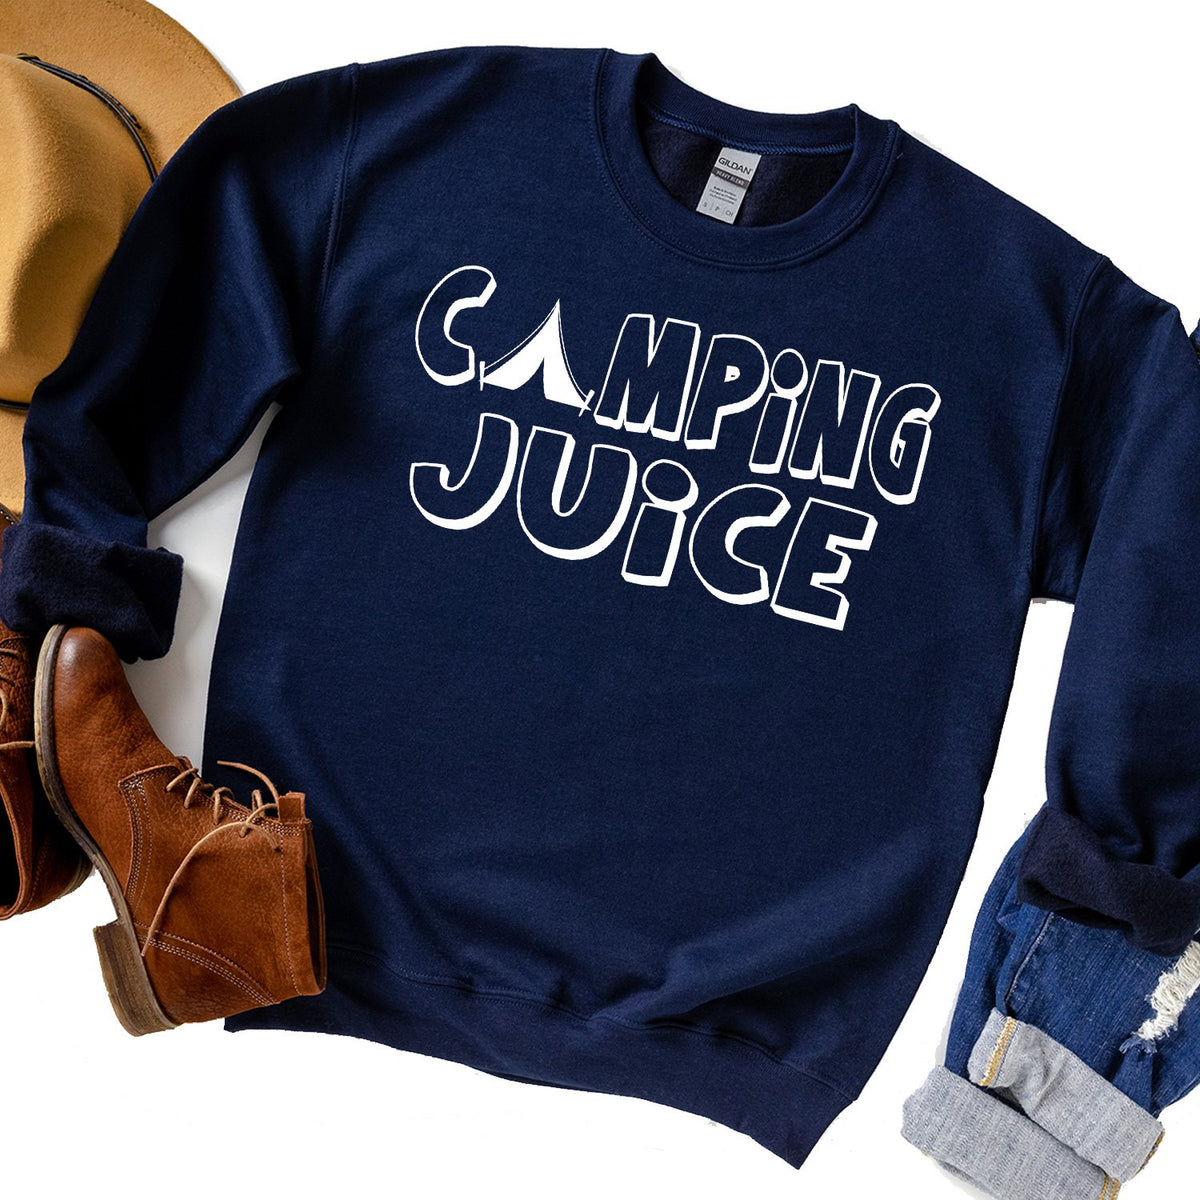 Camping Juice - Long Sleeve Heavy Crewneck Sweatshirt